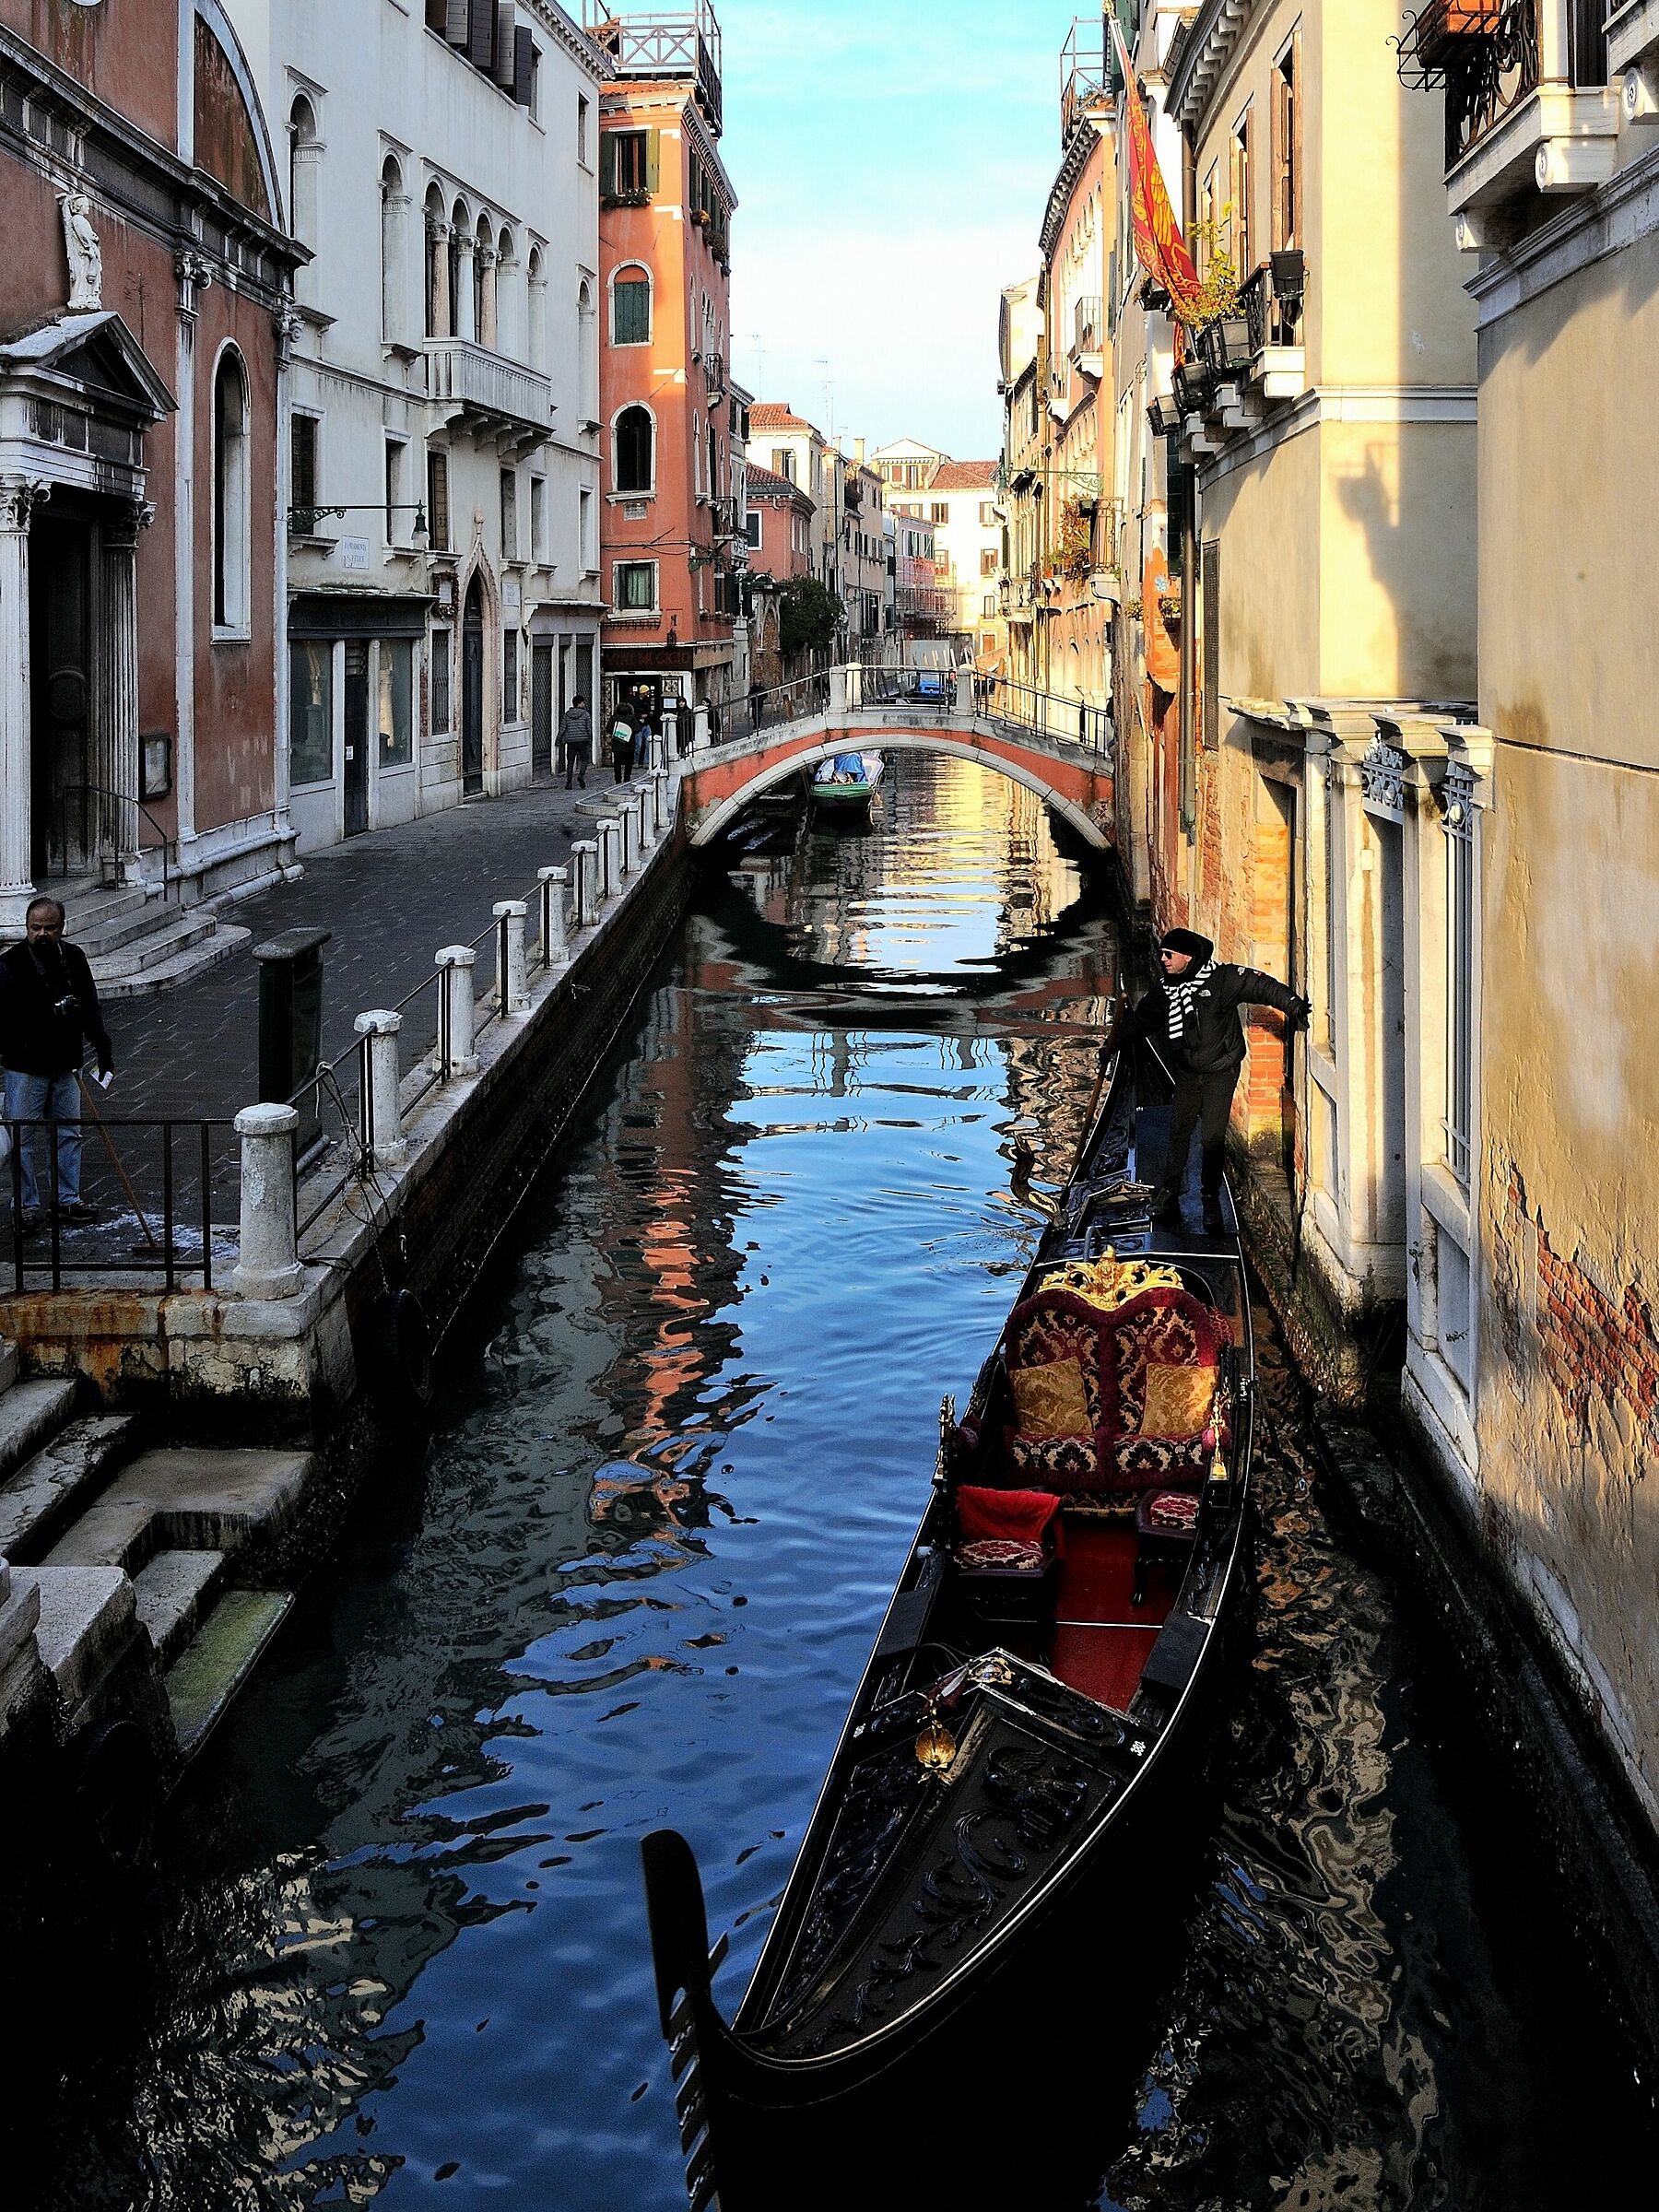 The gondola...